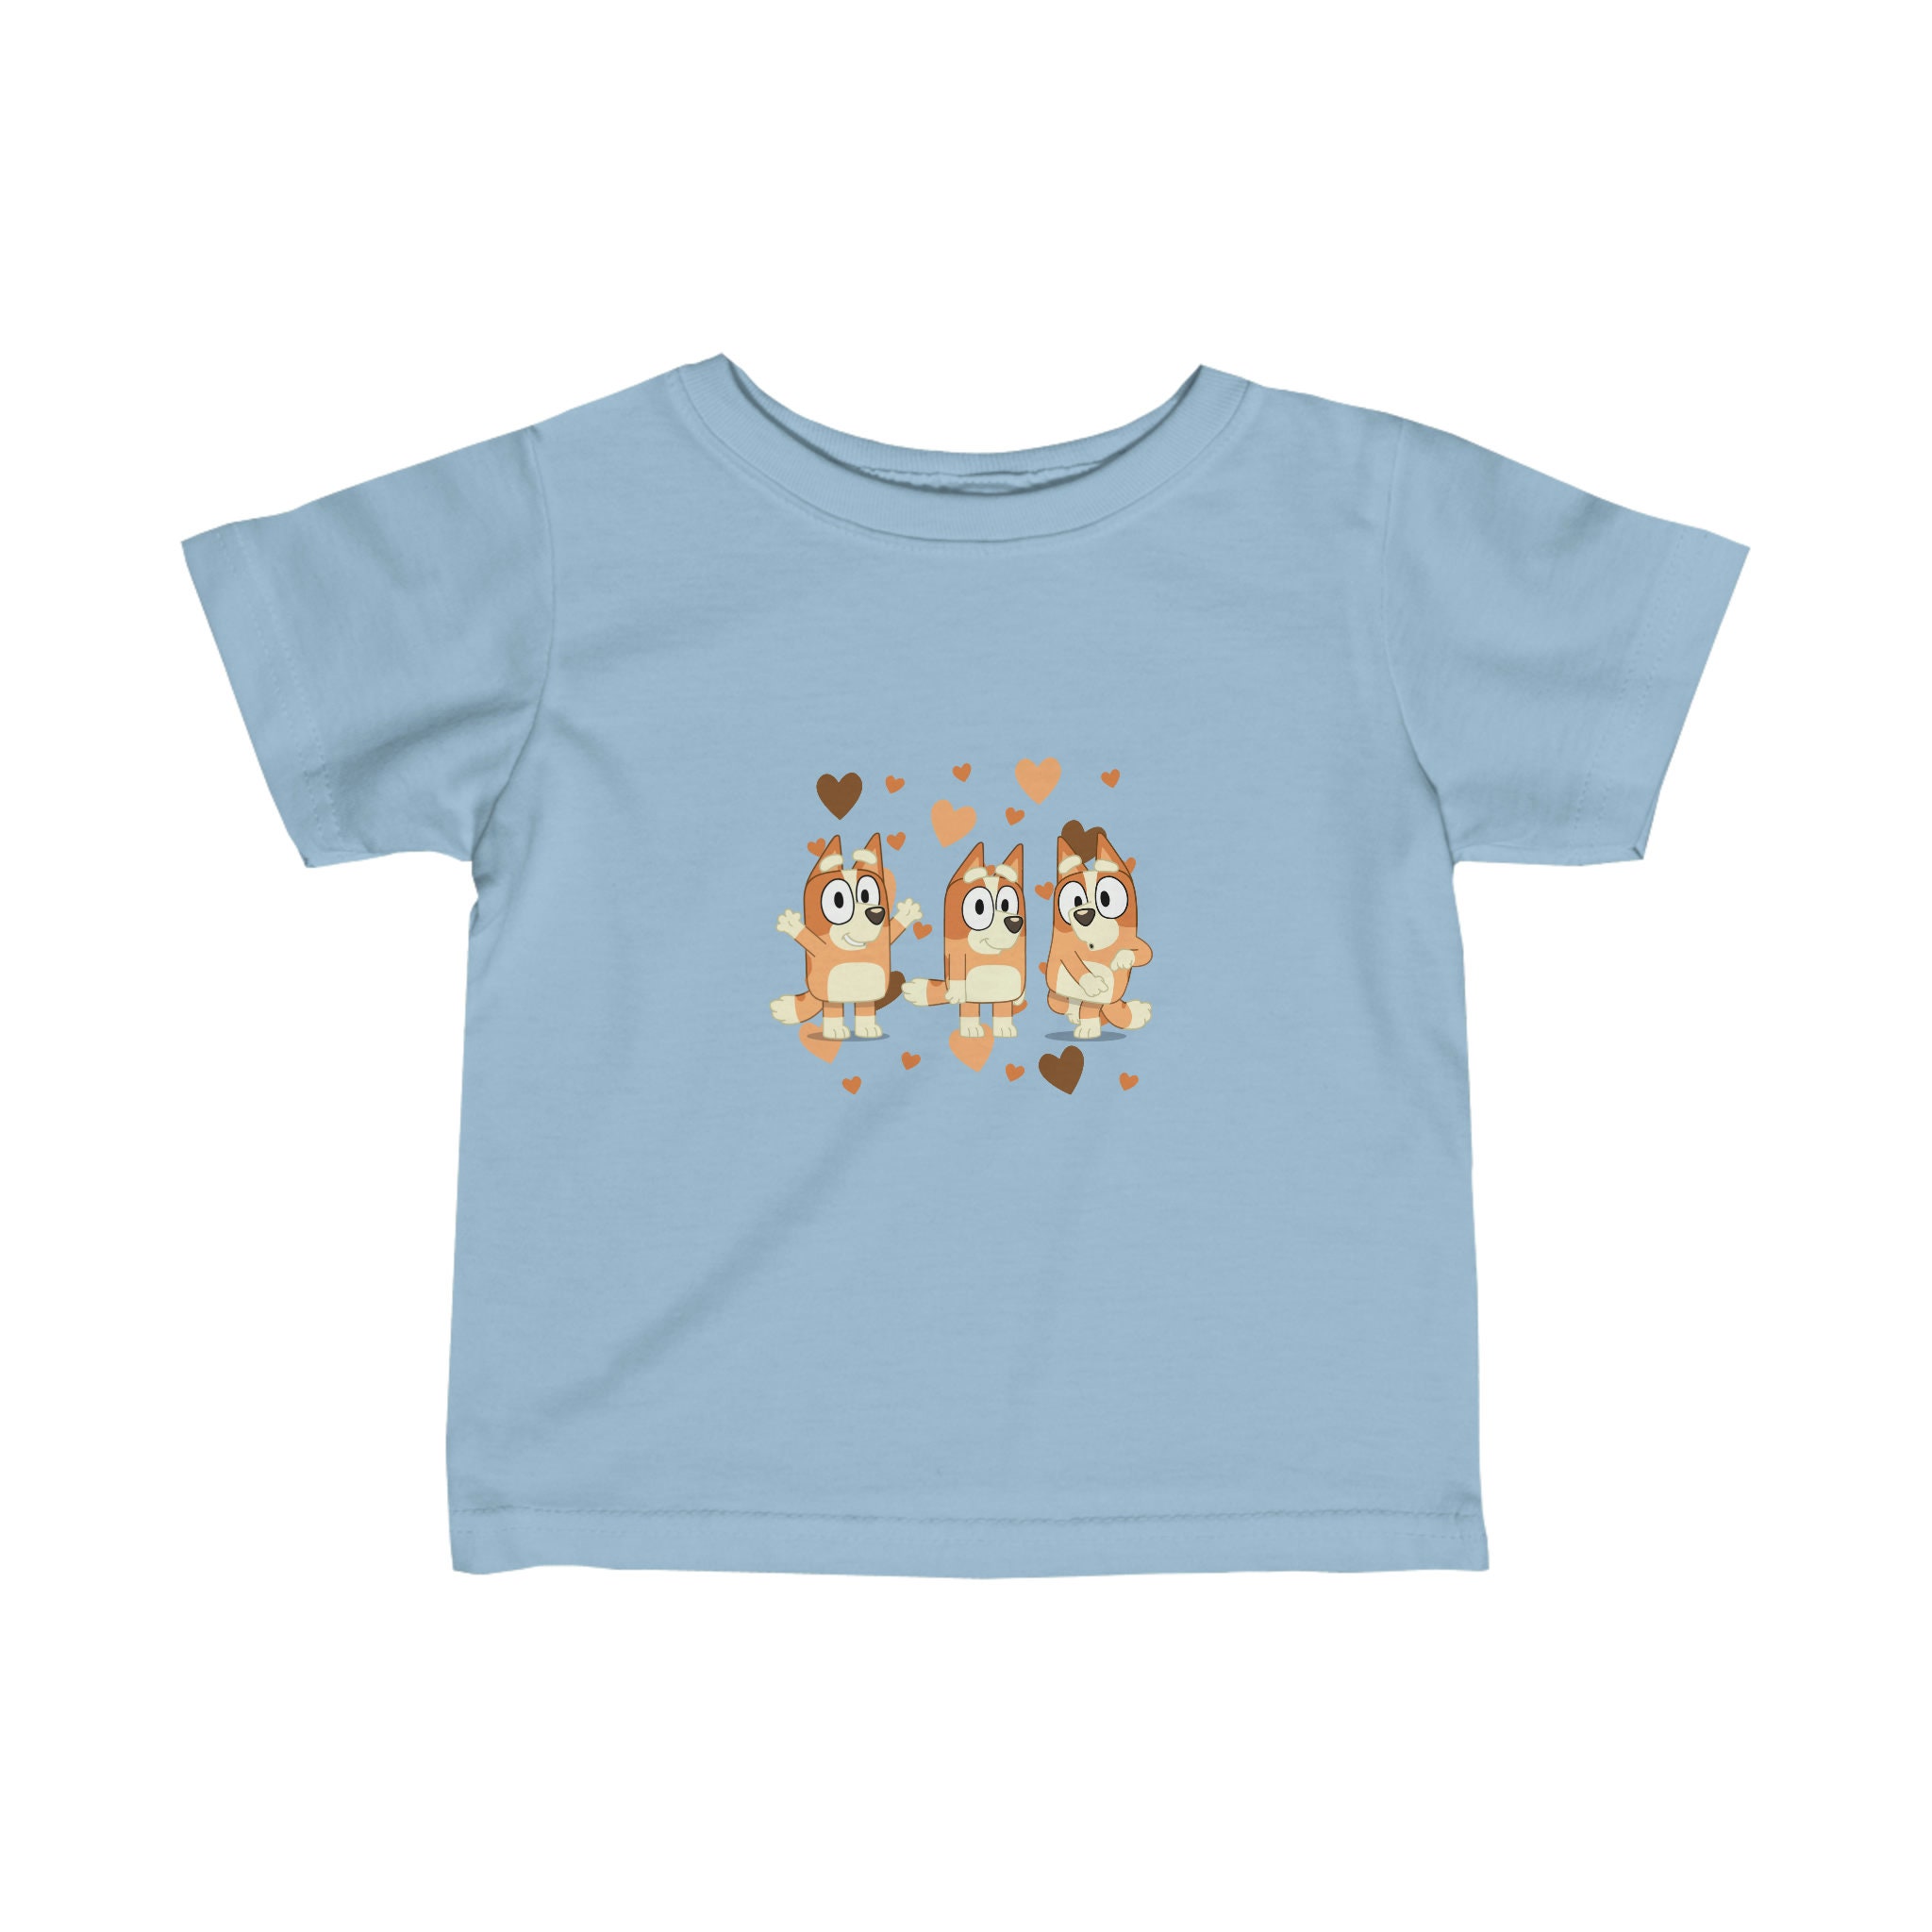 Youth Bluey & Bingo T-shirt size 2t-4t 